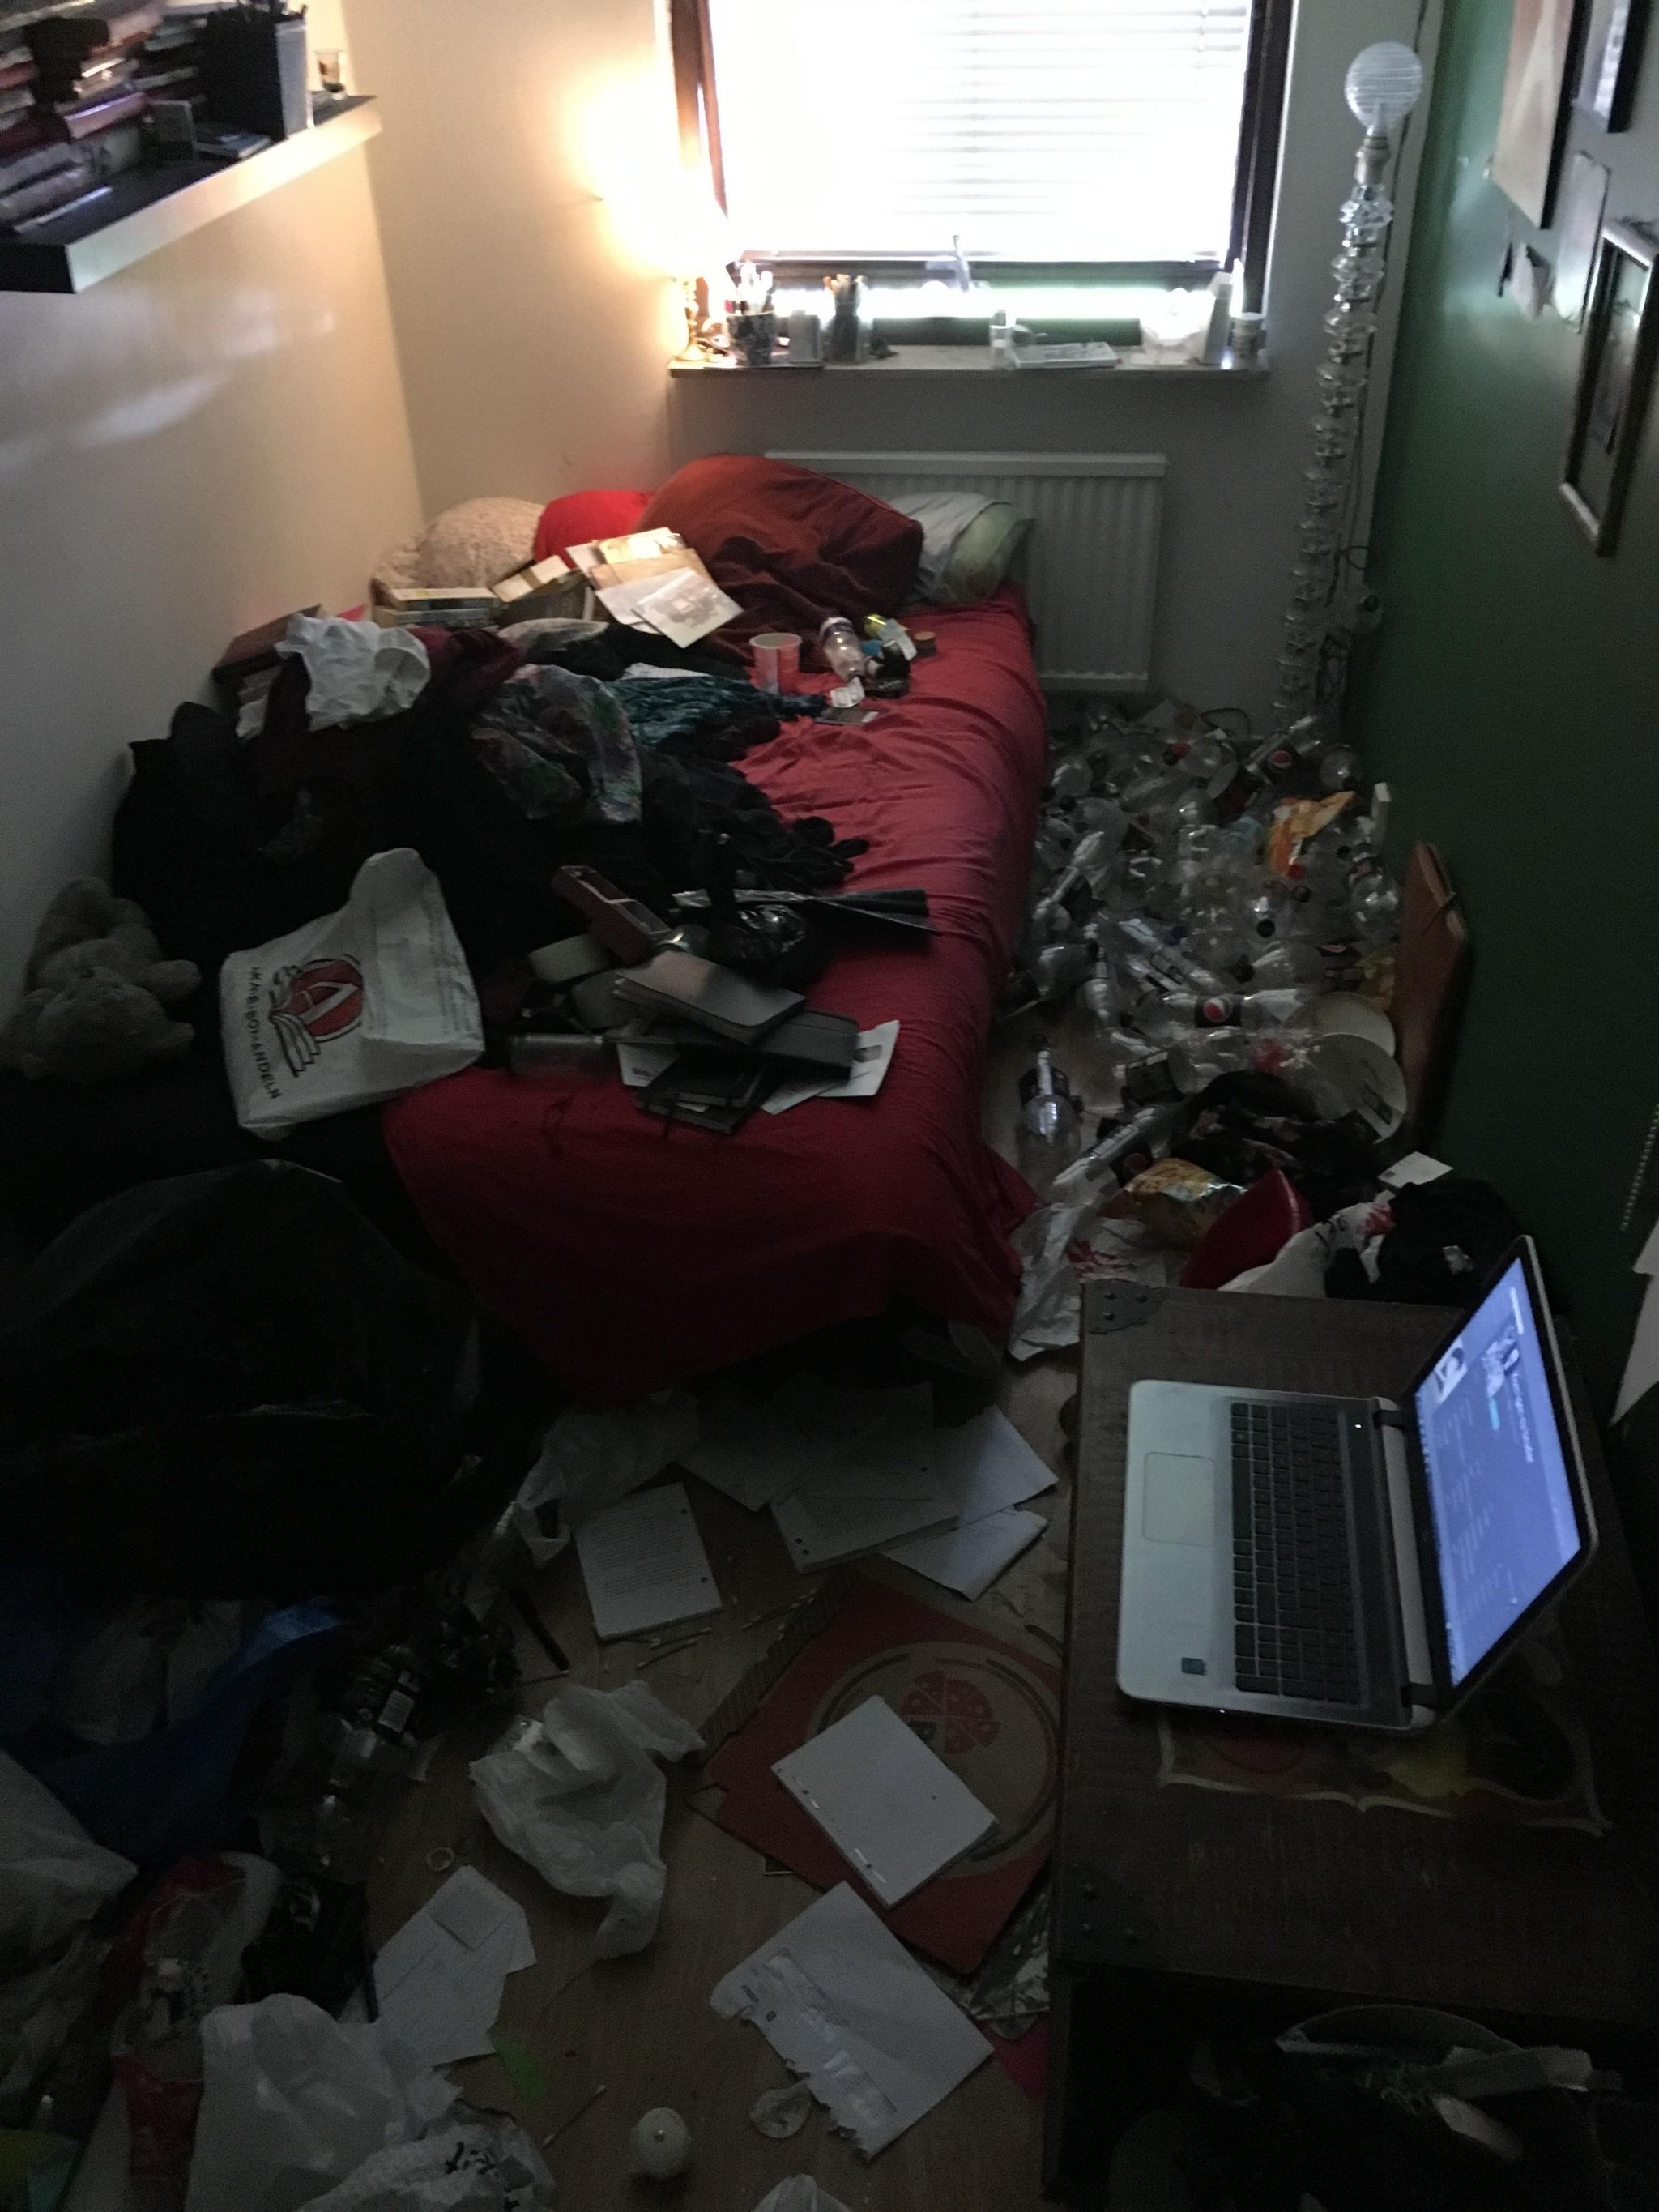 Messy bedroom